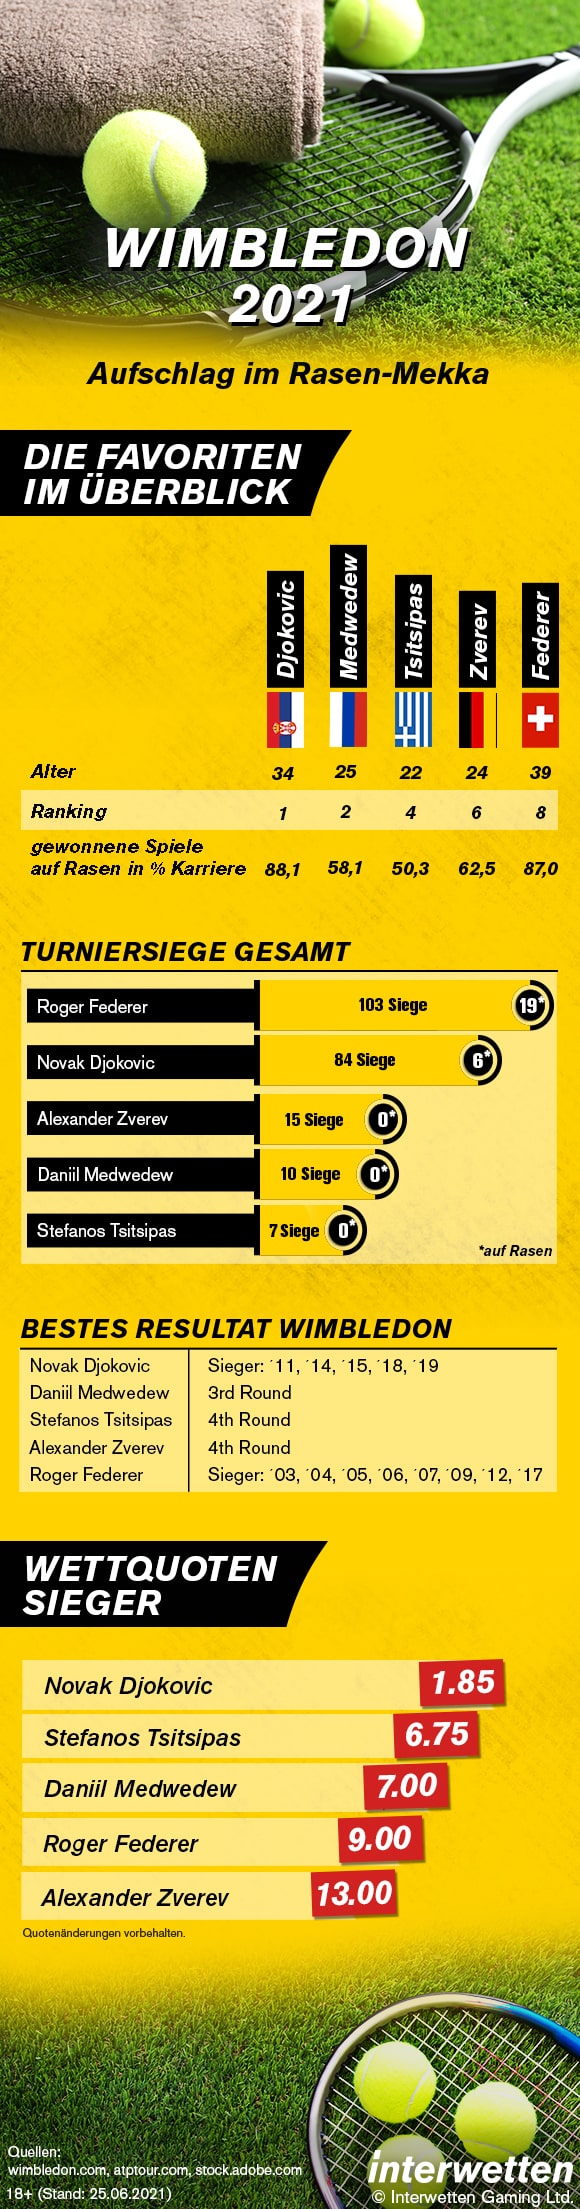 Infografik Wimbledon 2021